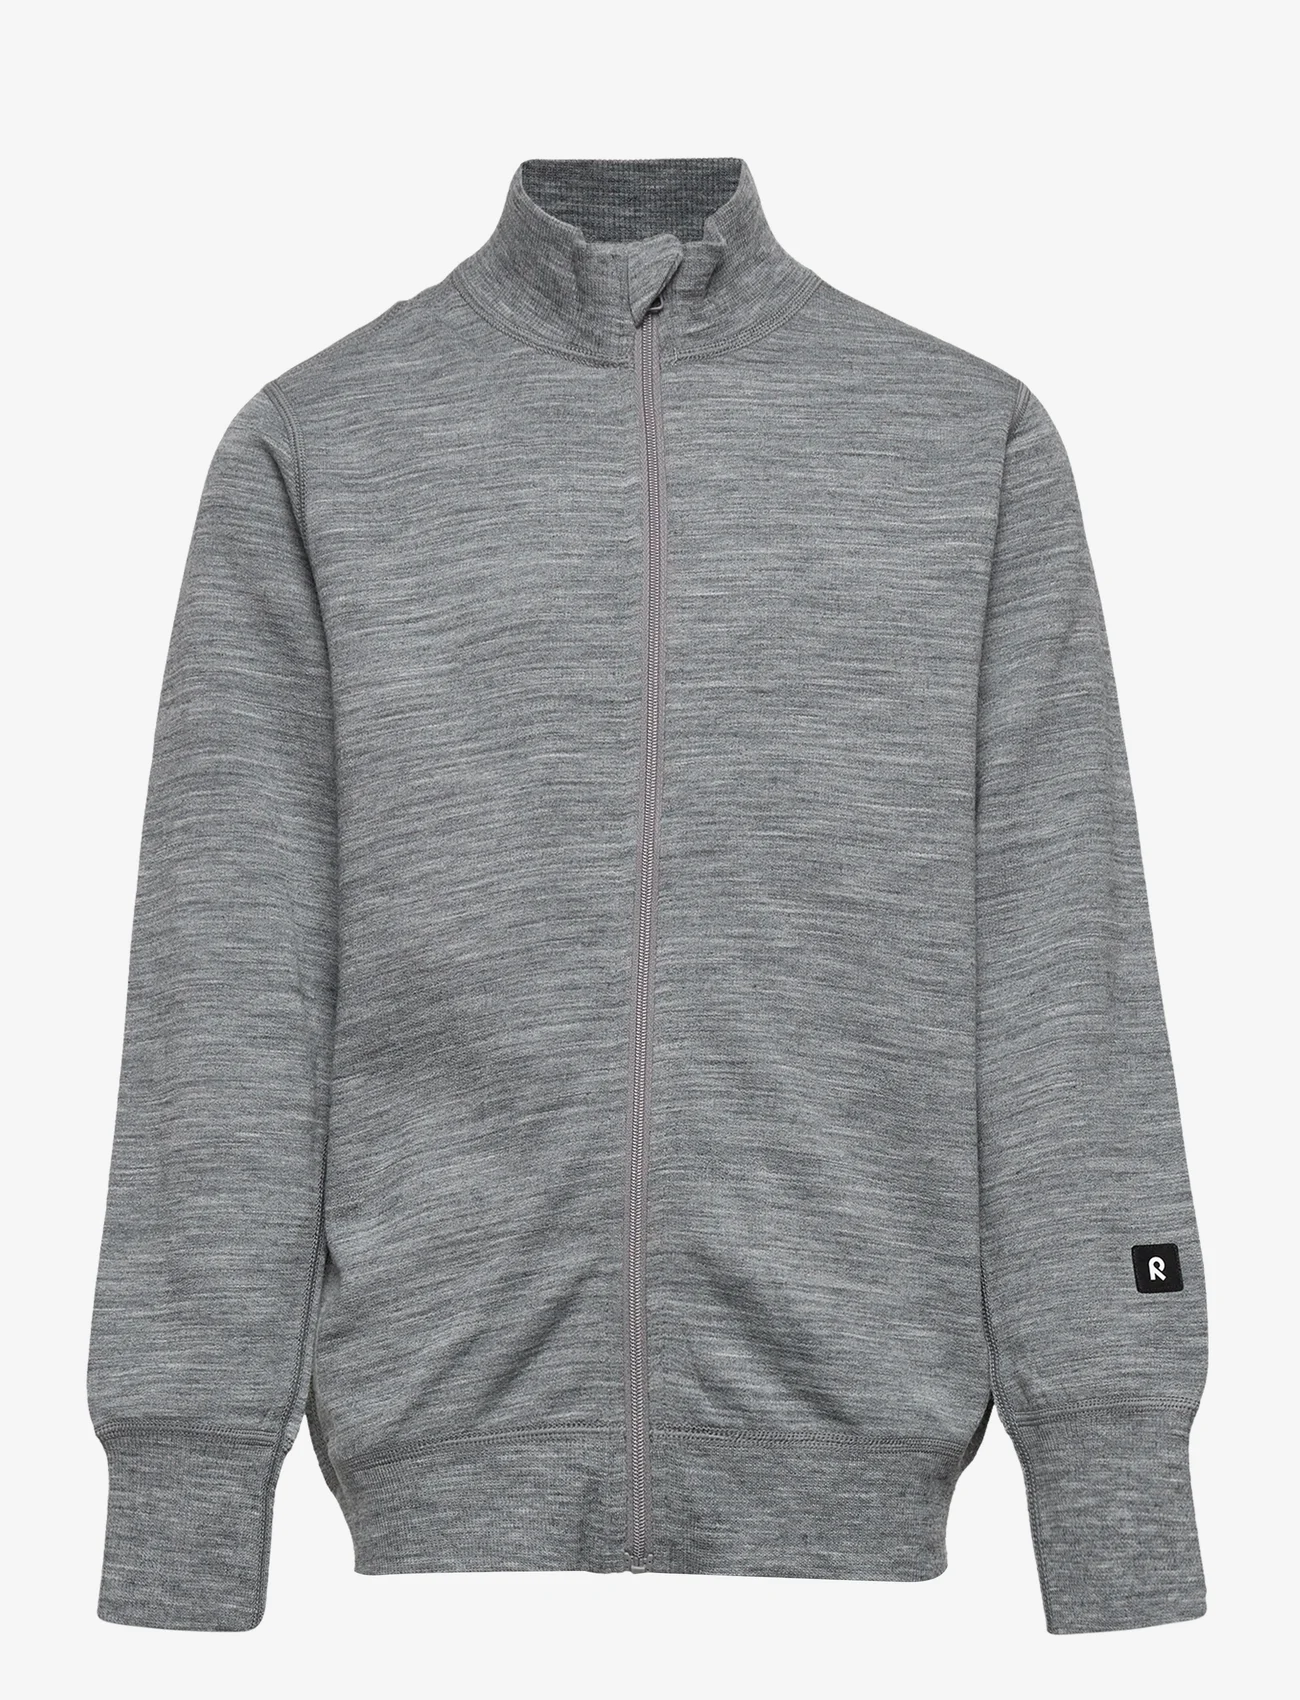 Reima - Sweater, Mahin - sweatshirts - melange grey - 0